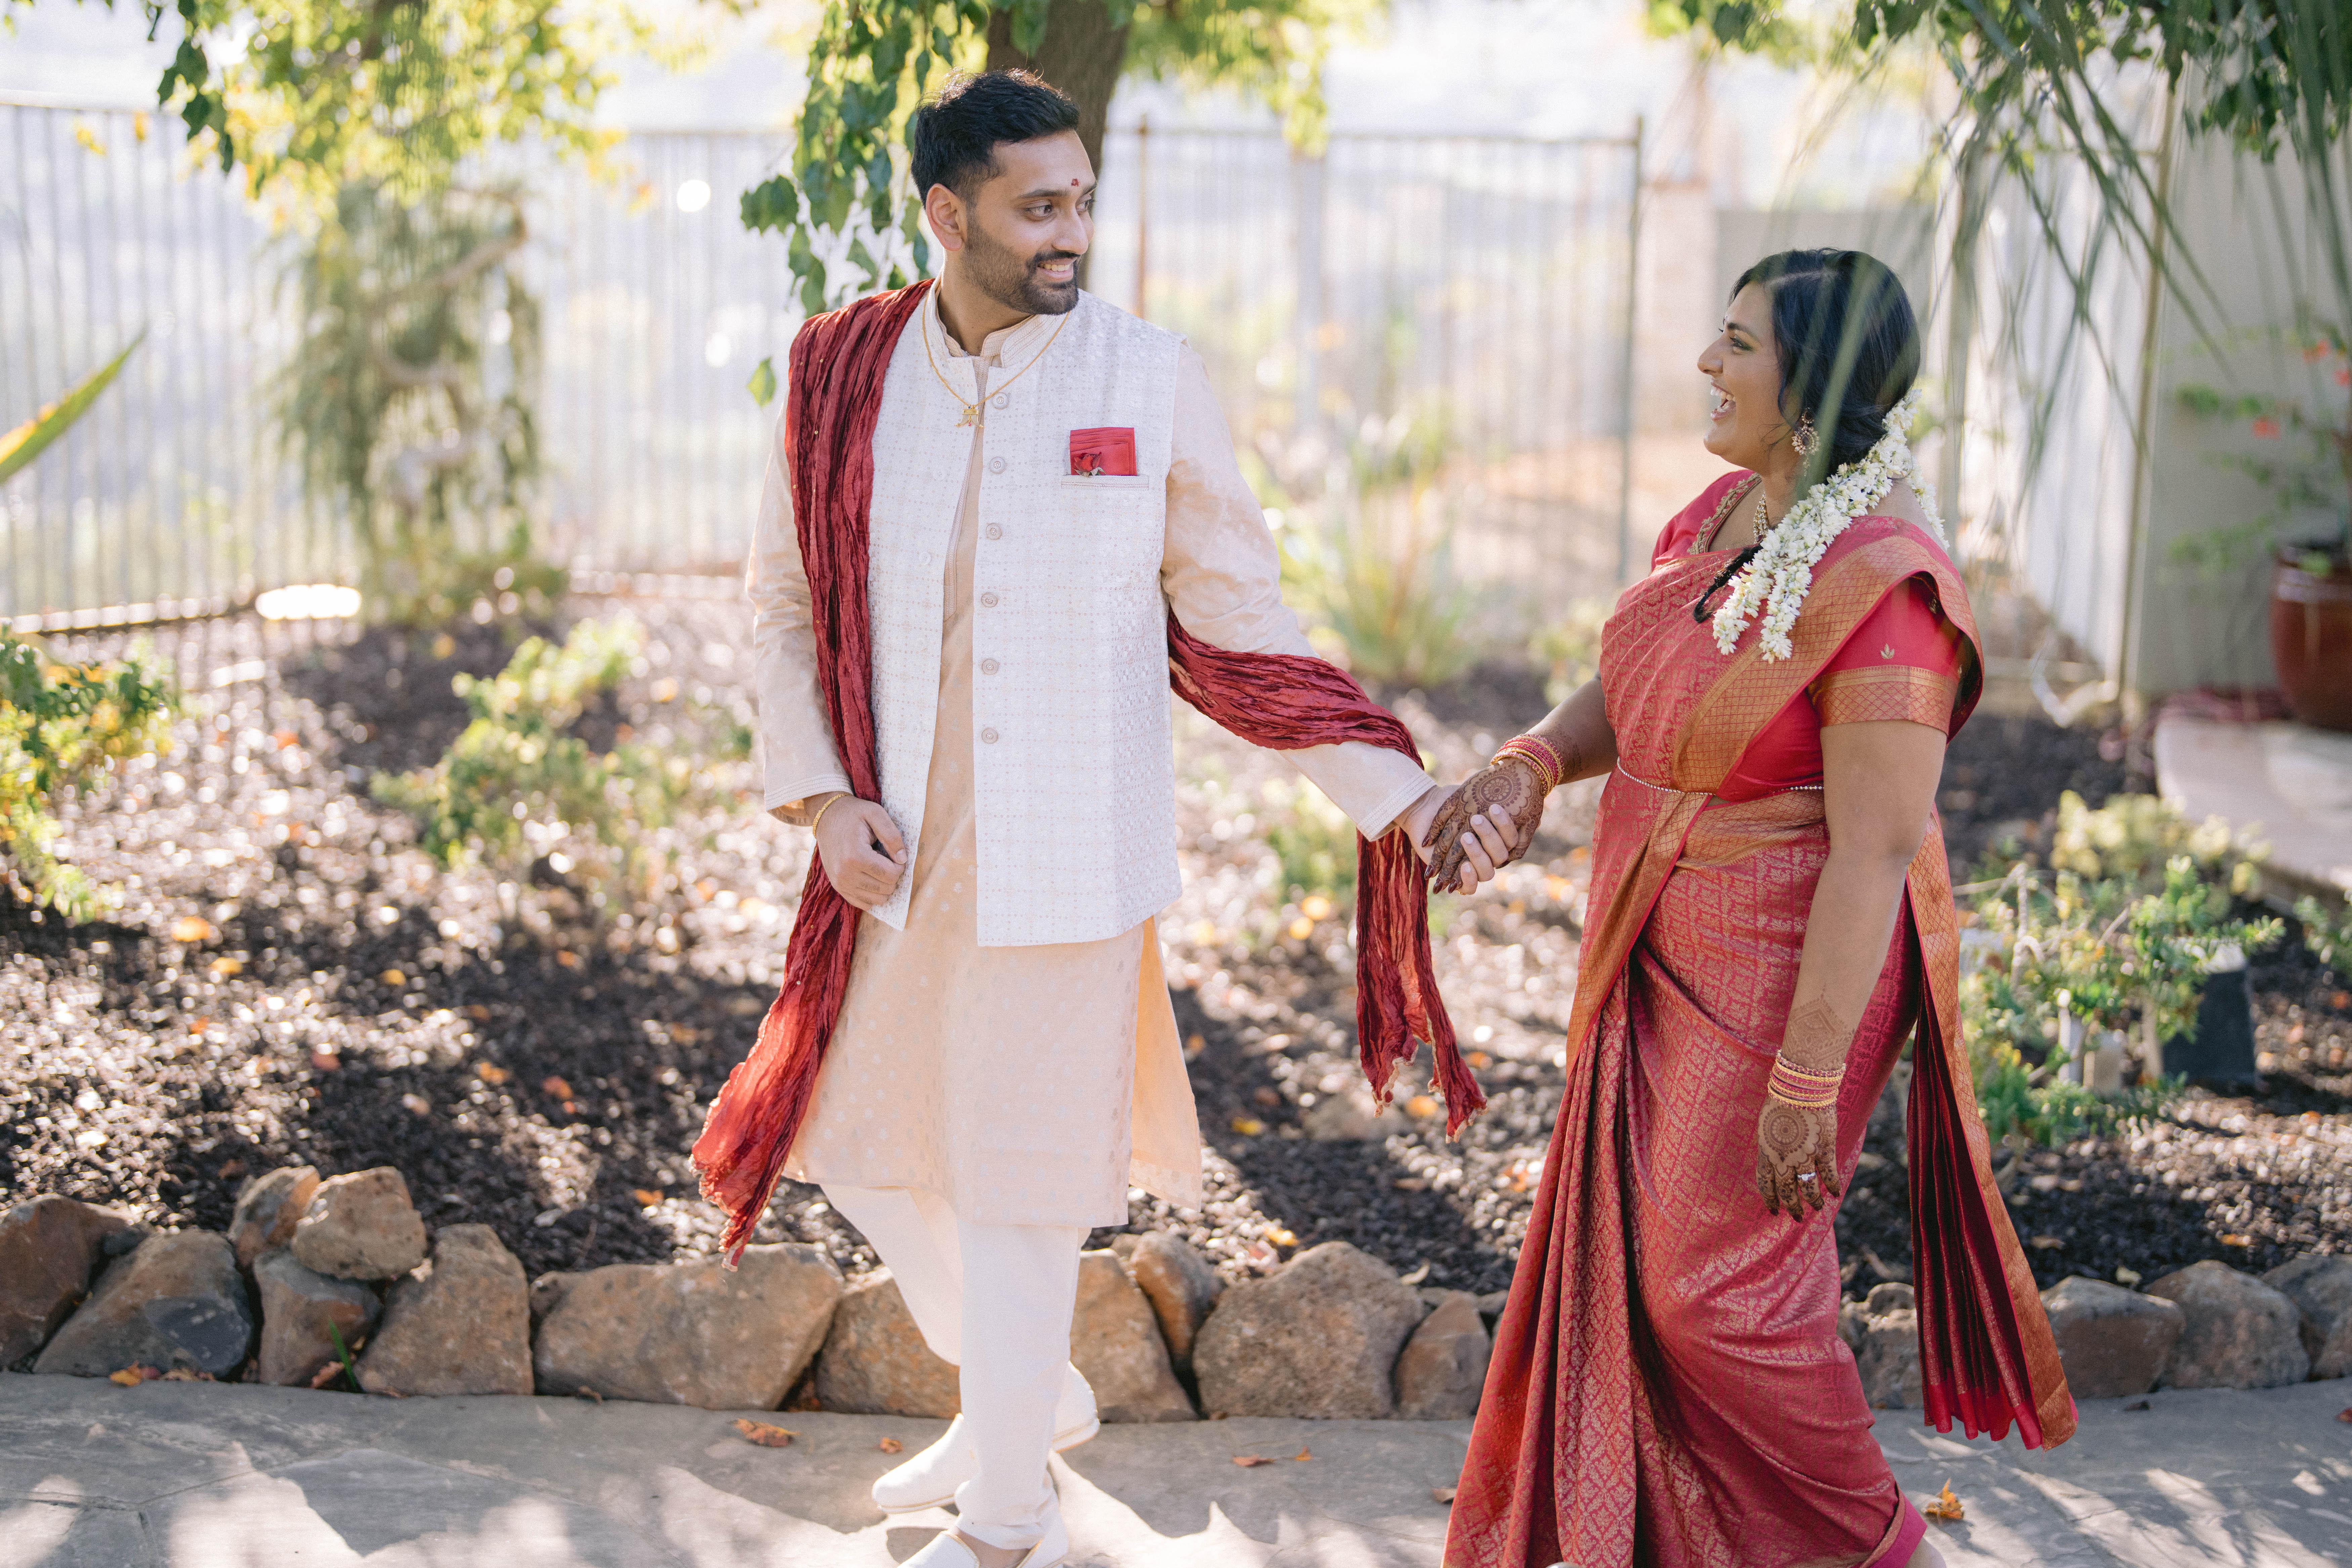 The Wedding Website of Apurva Gorti and Akhil Velpuri